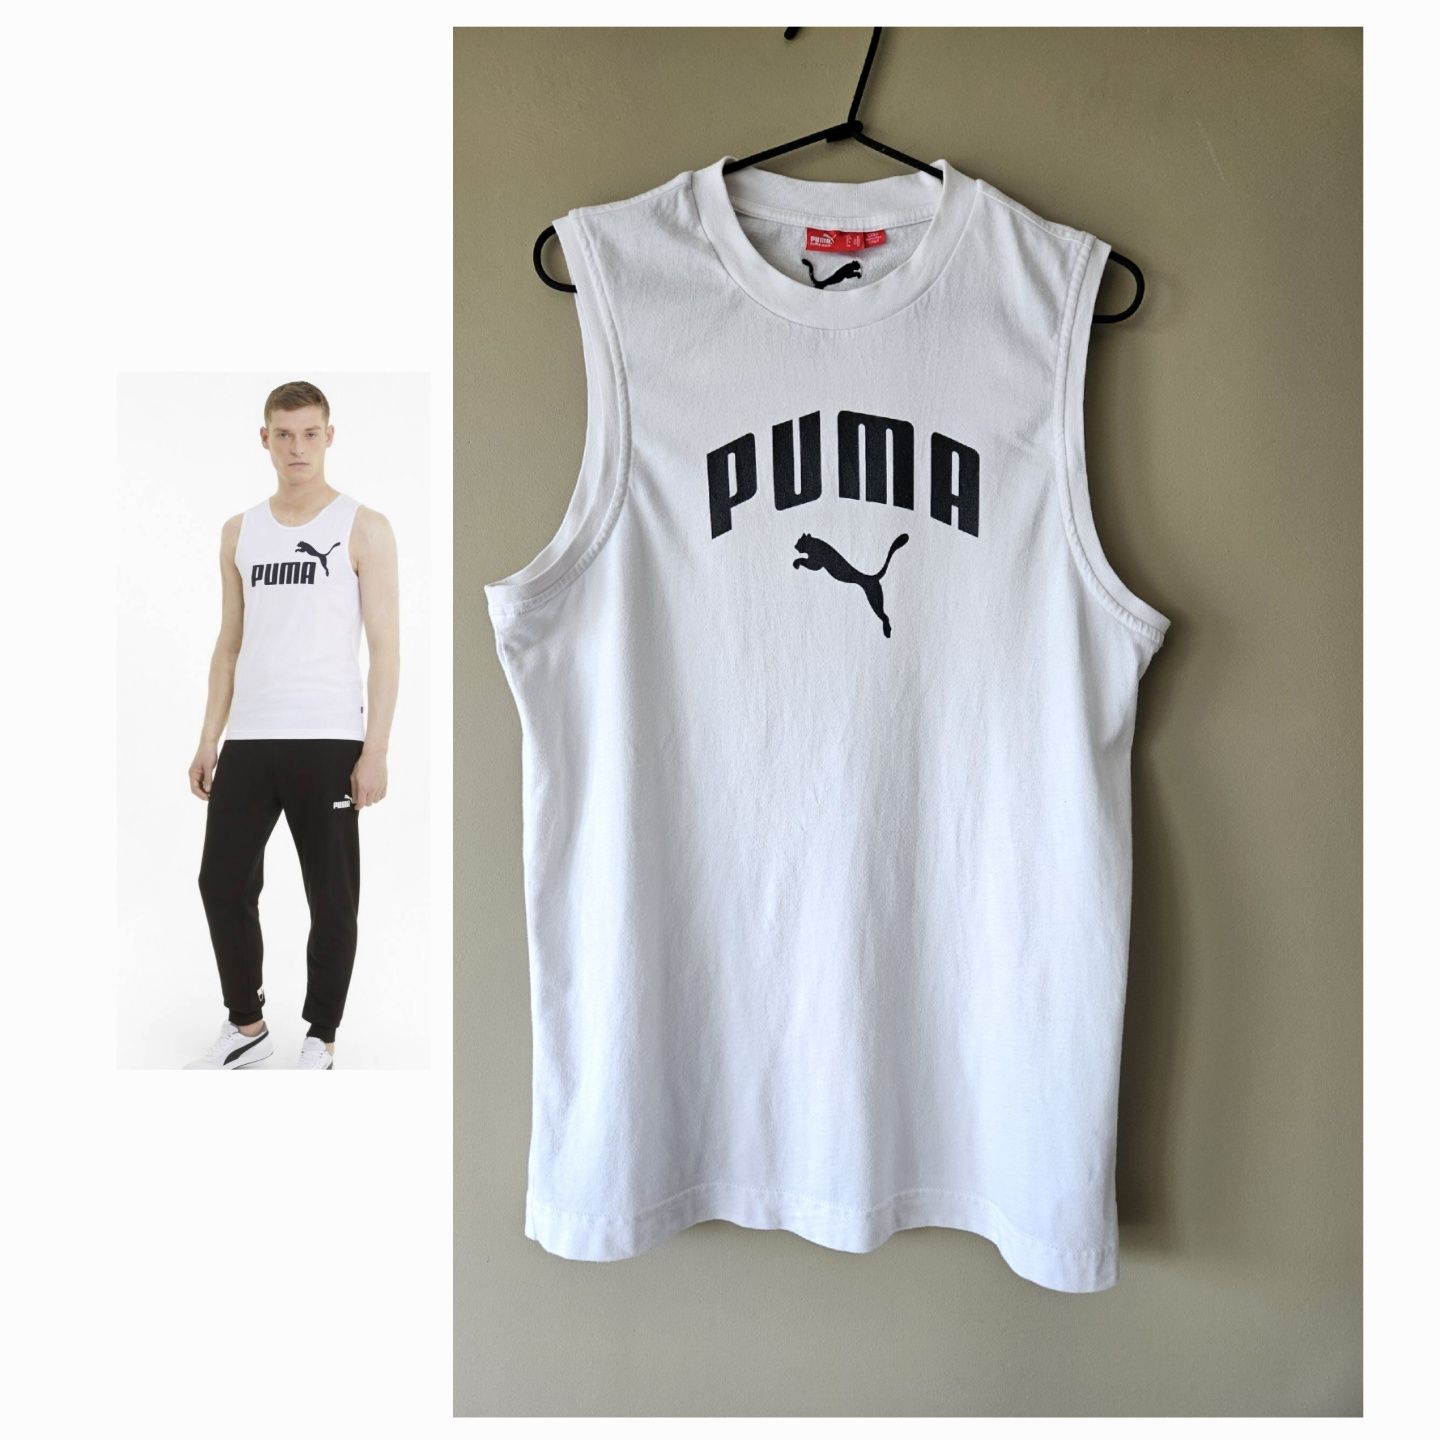 Puma t-shirt męski rozmiar M